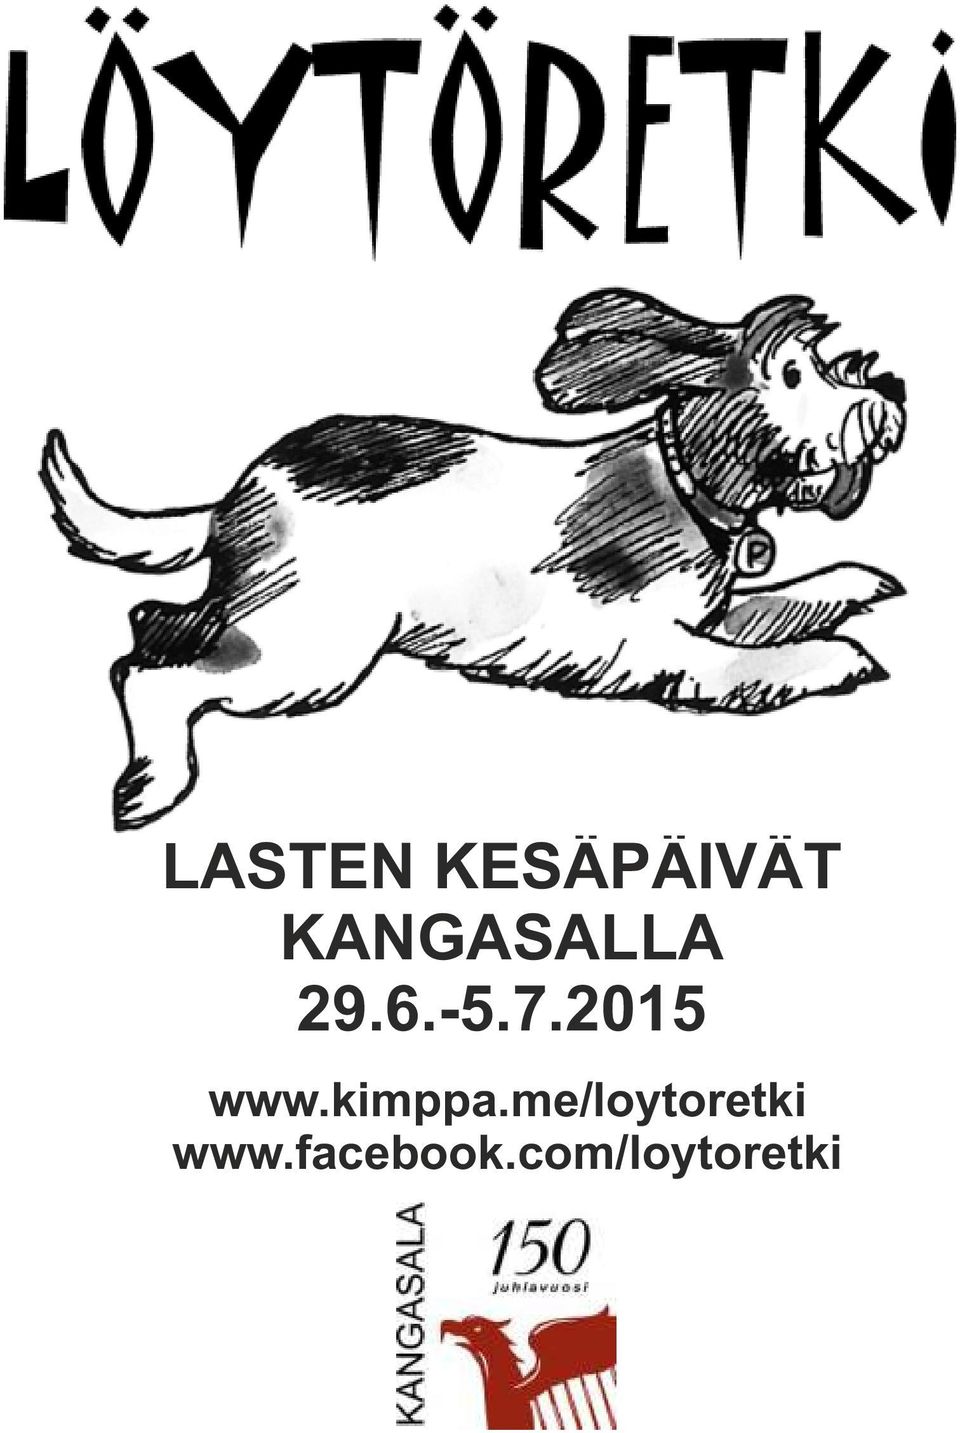 2015 www.kimppa.